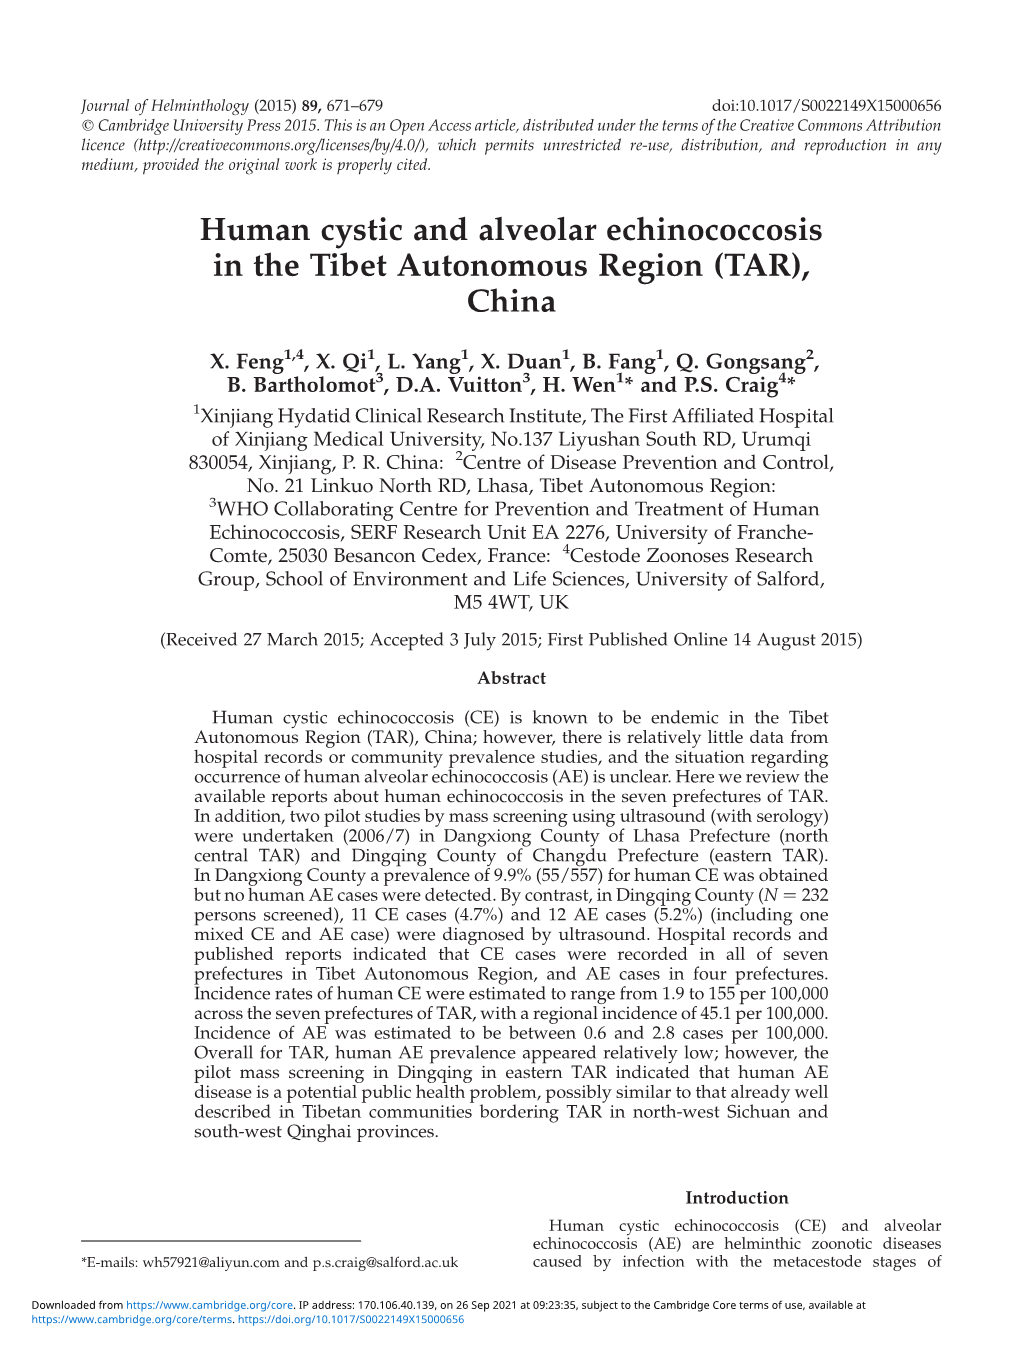 Human Cystic and Alveolar Echinococcosis in the Tibet Autonomous Region (TAR), China